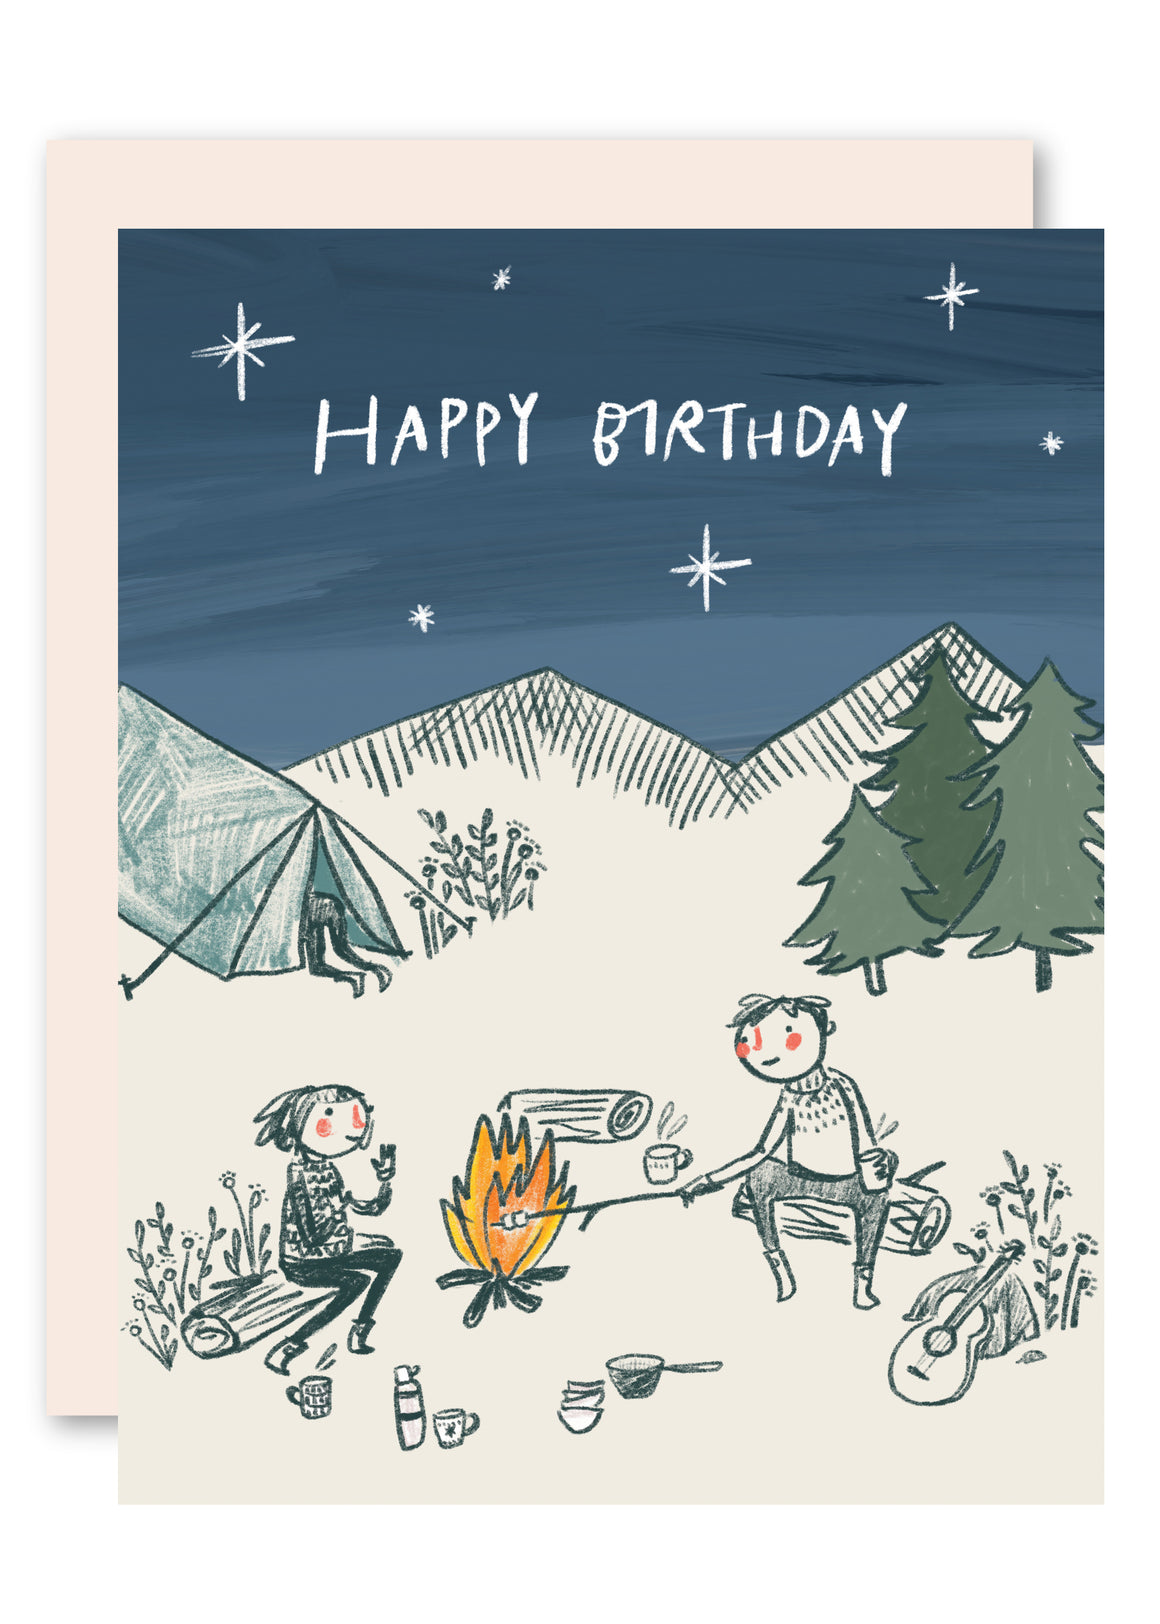 Camping Birthday Card